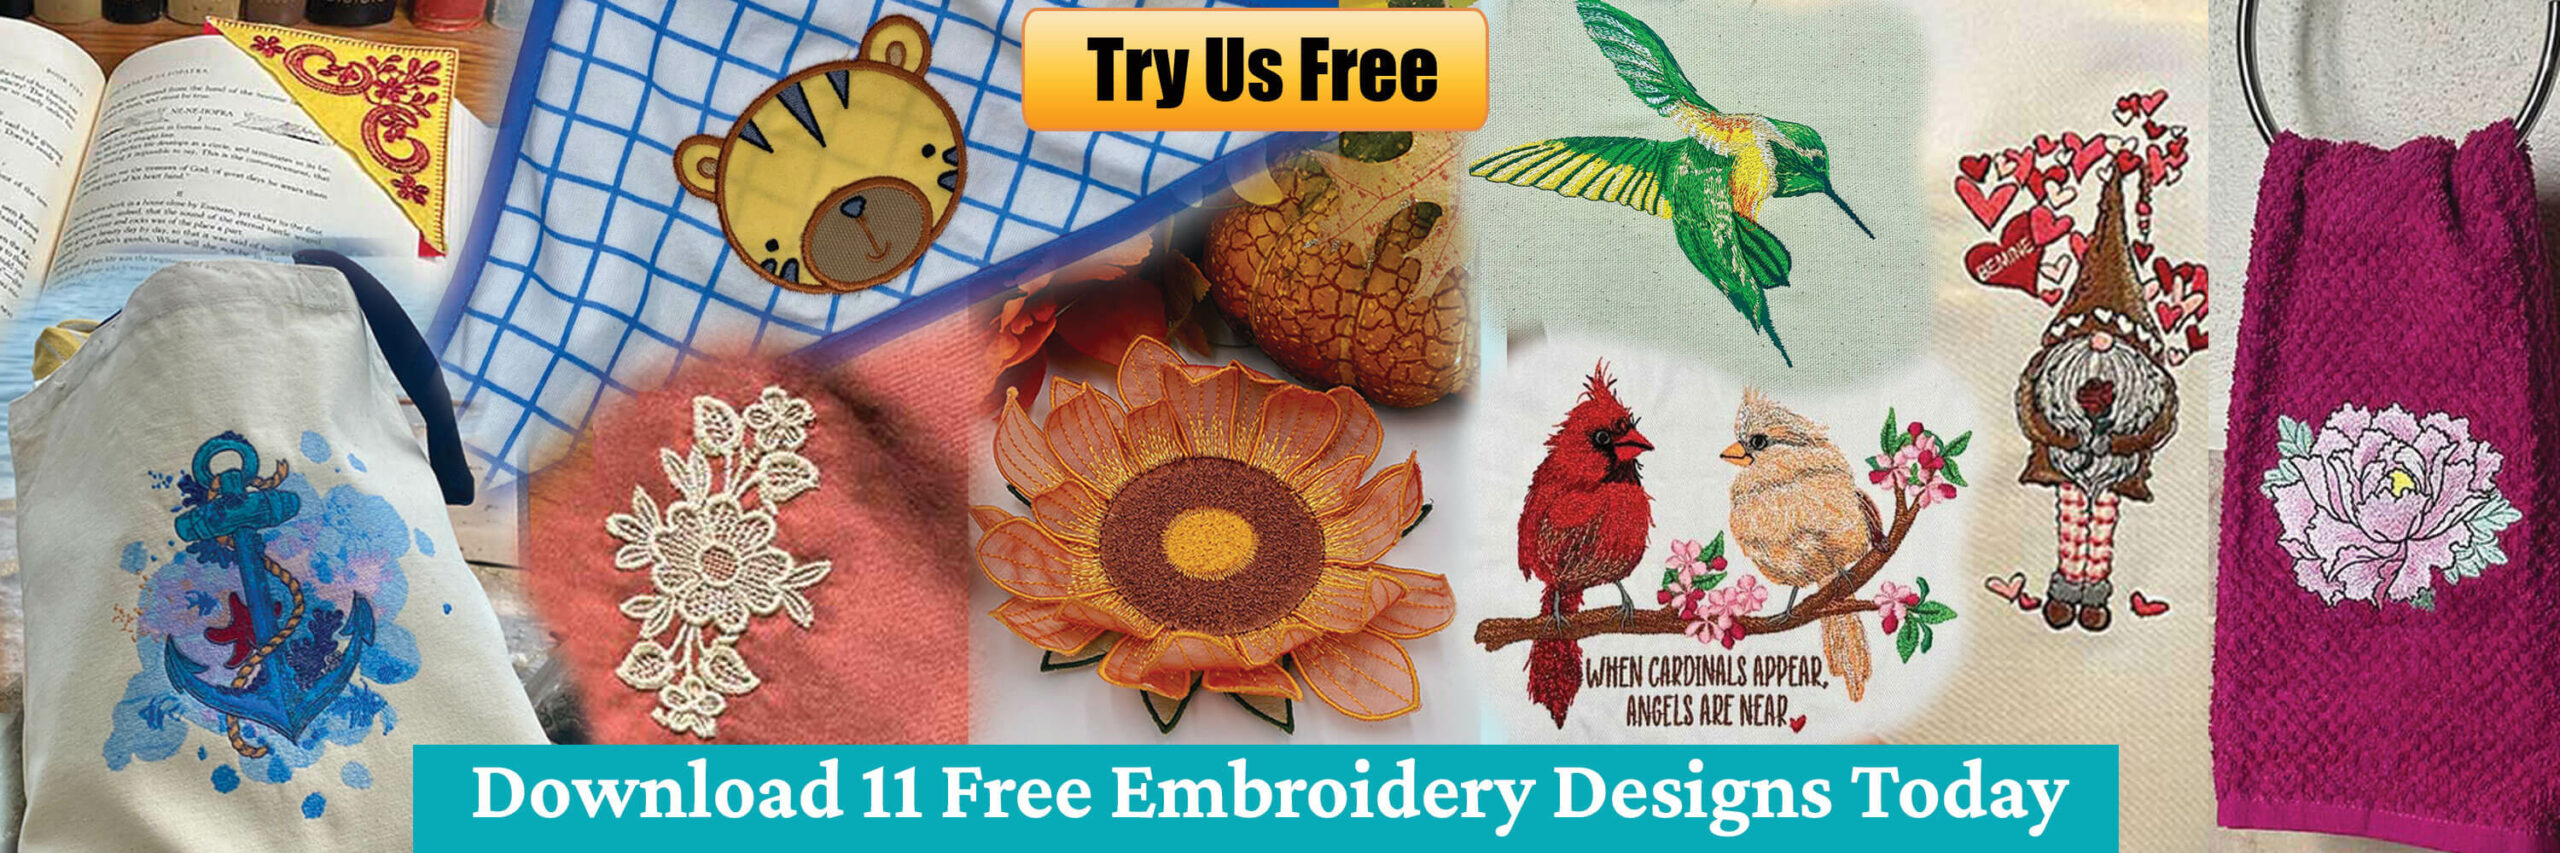 Free Embroidery Legacy Design Kit Desktop